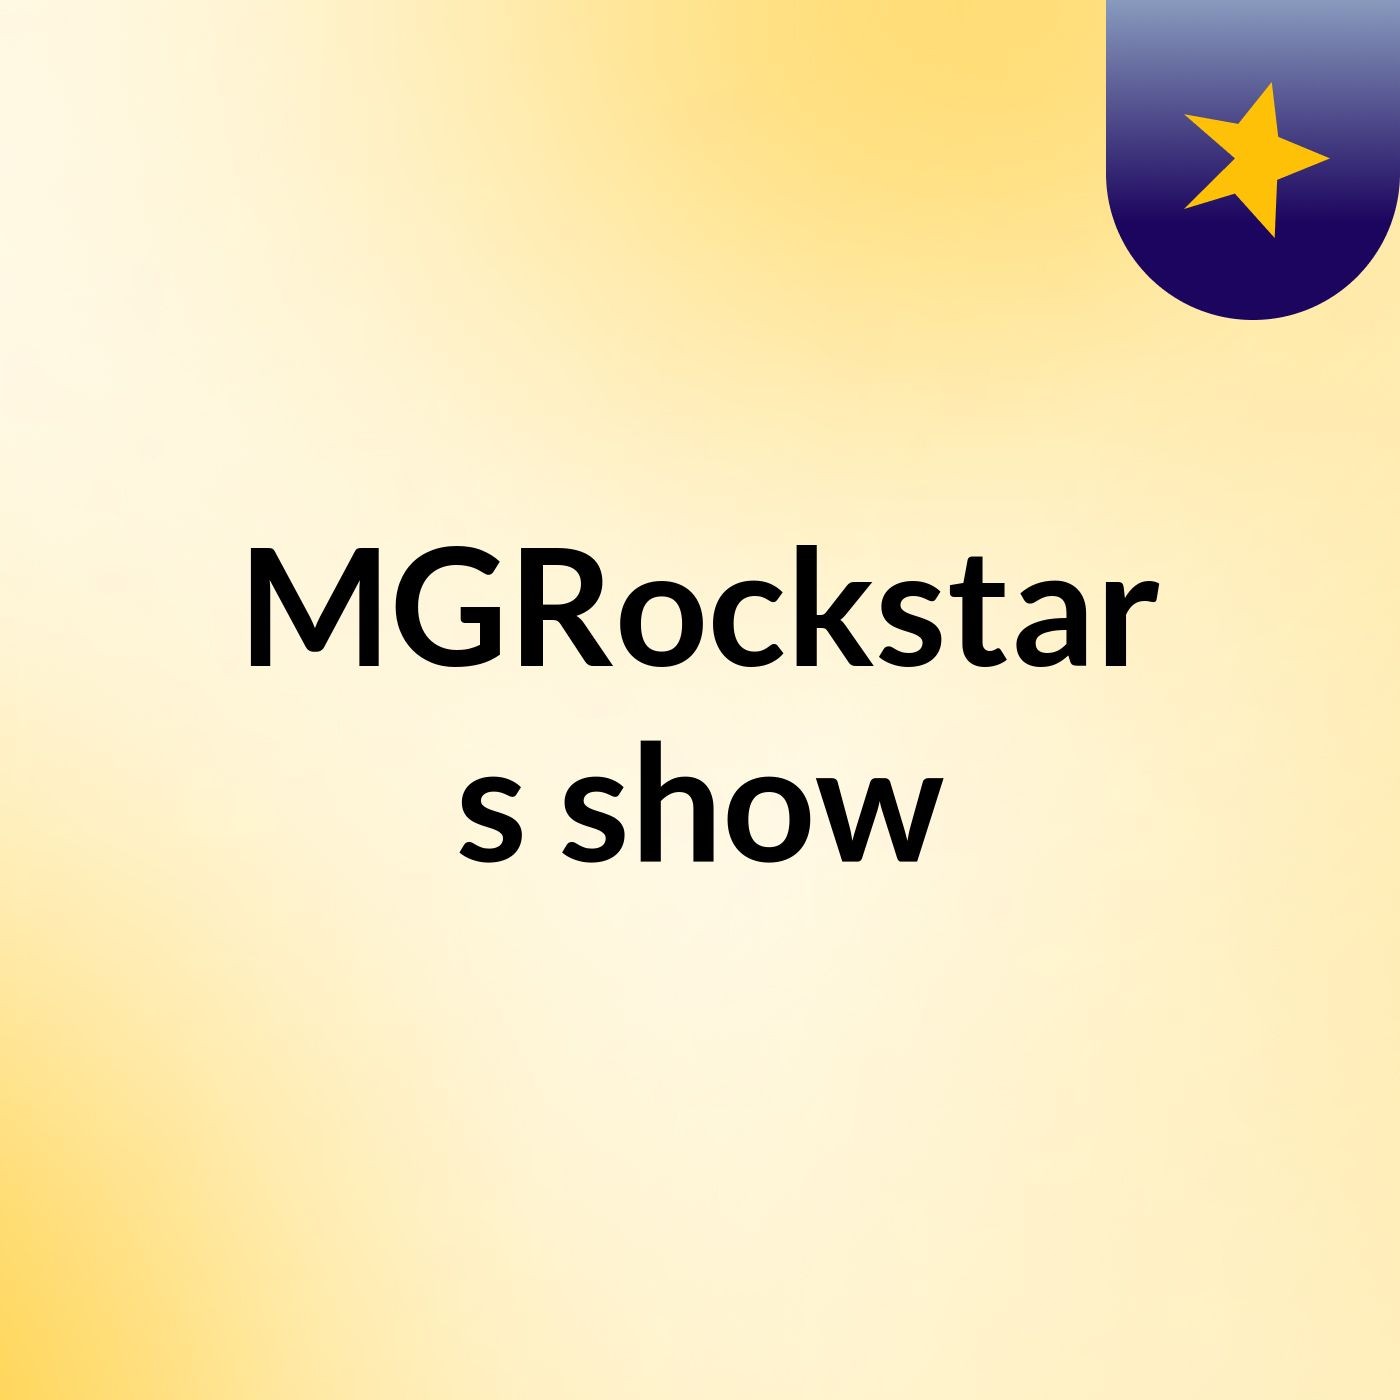 MGRockstar's show